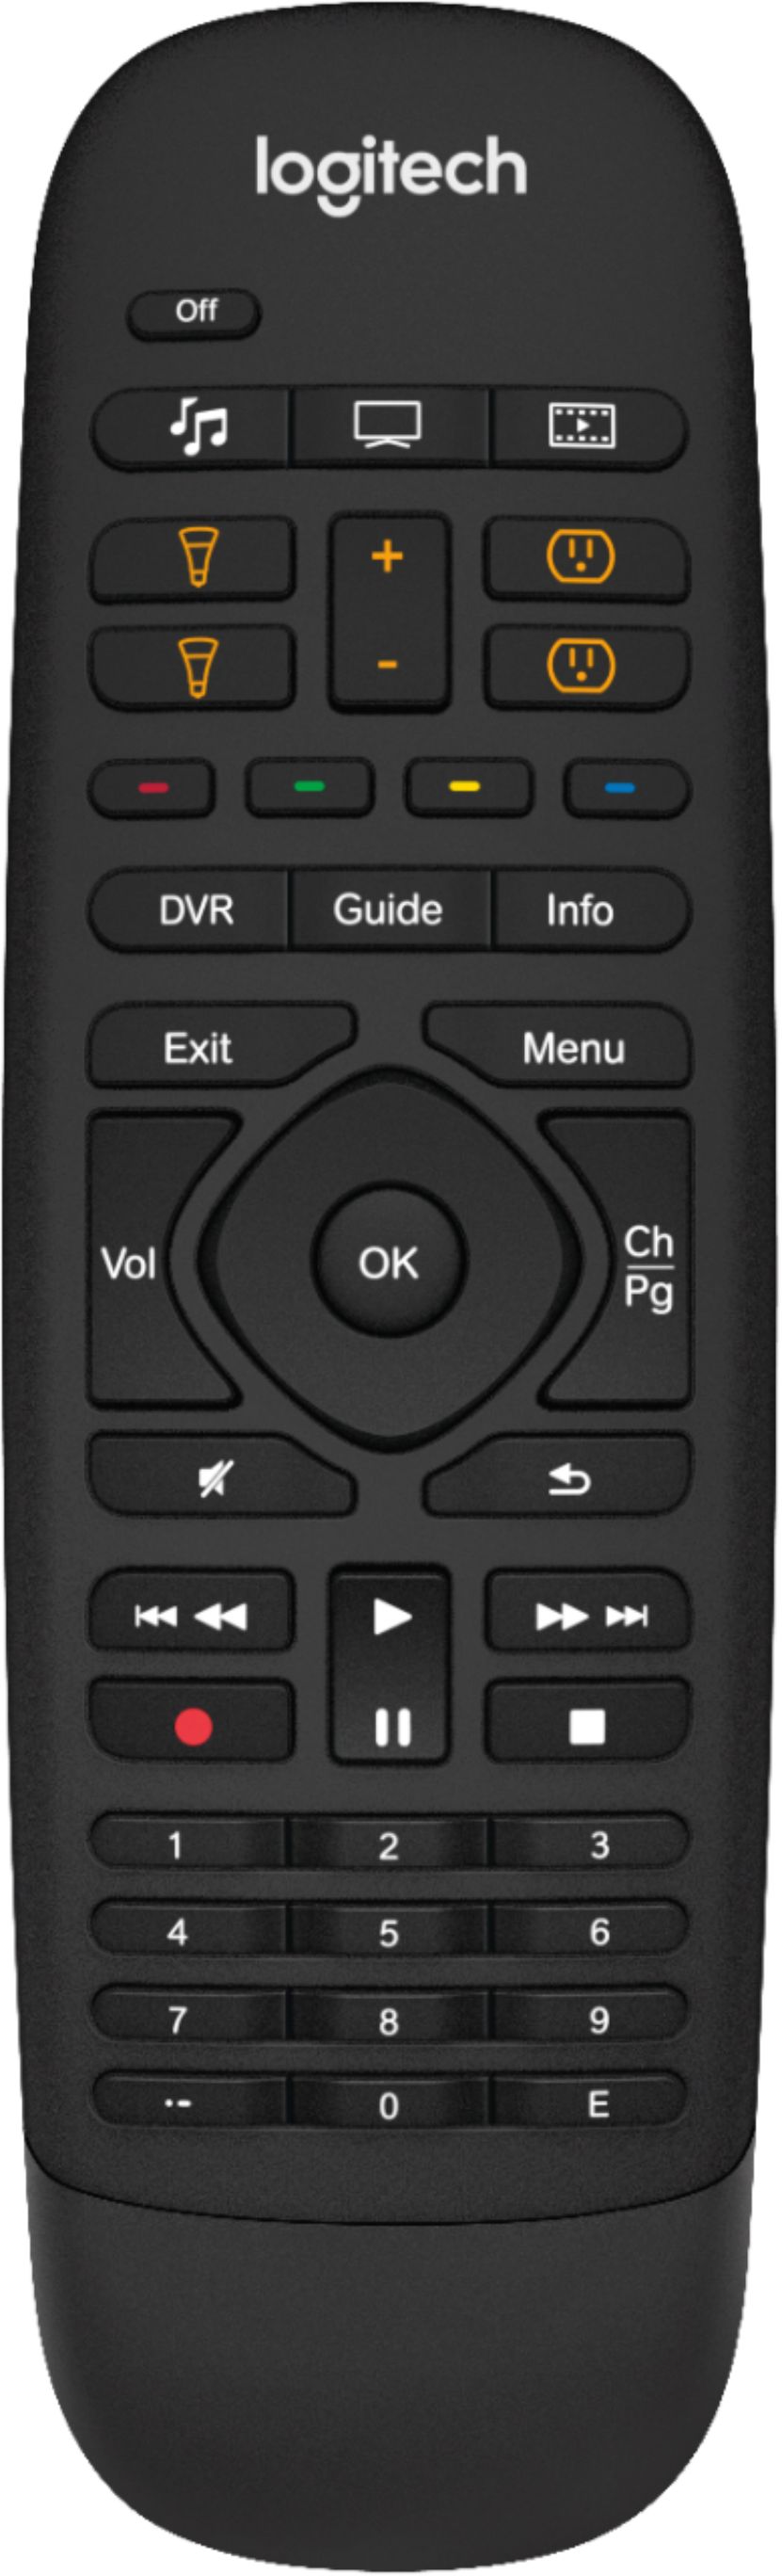 Logitech Harmony Companion Home Remote Control for Smart Home 915-000239 